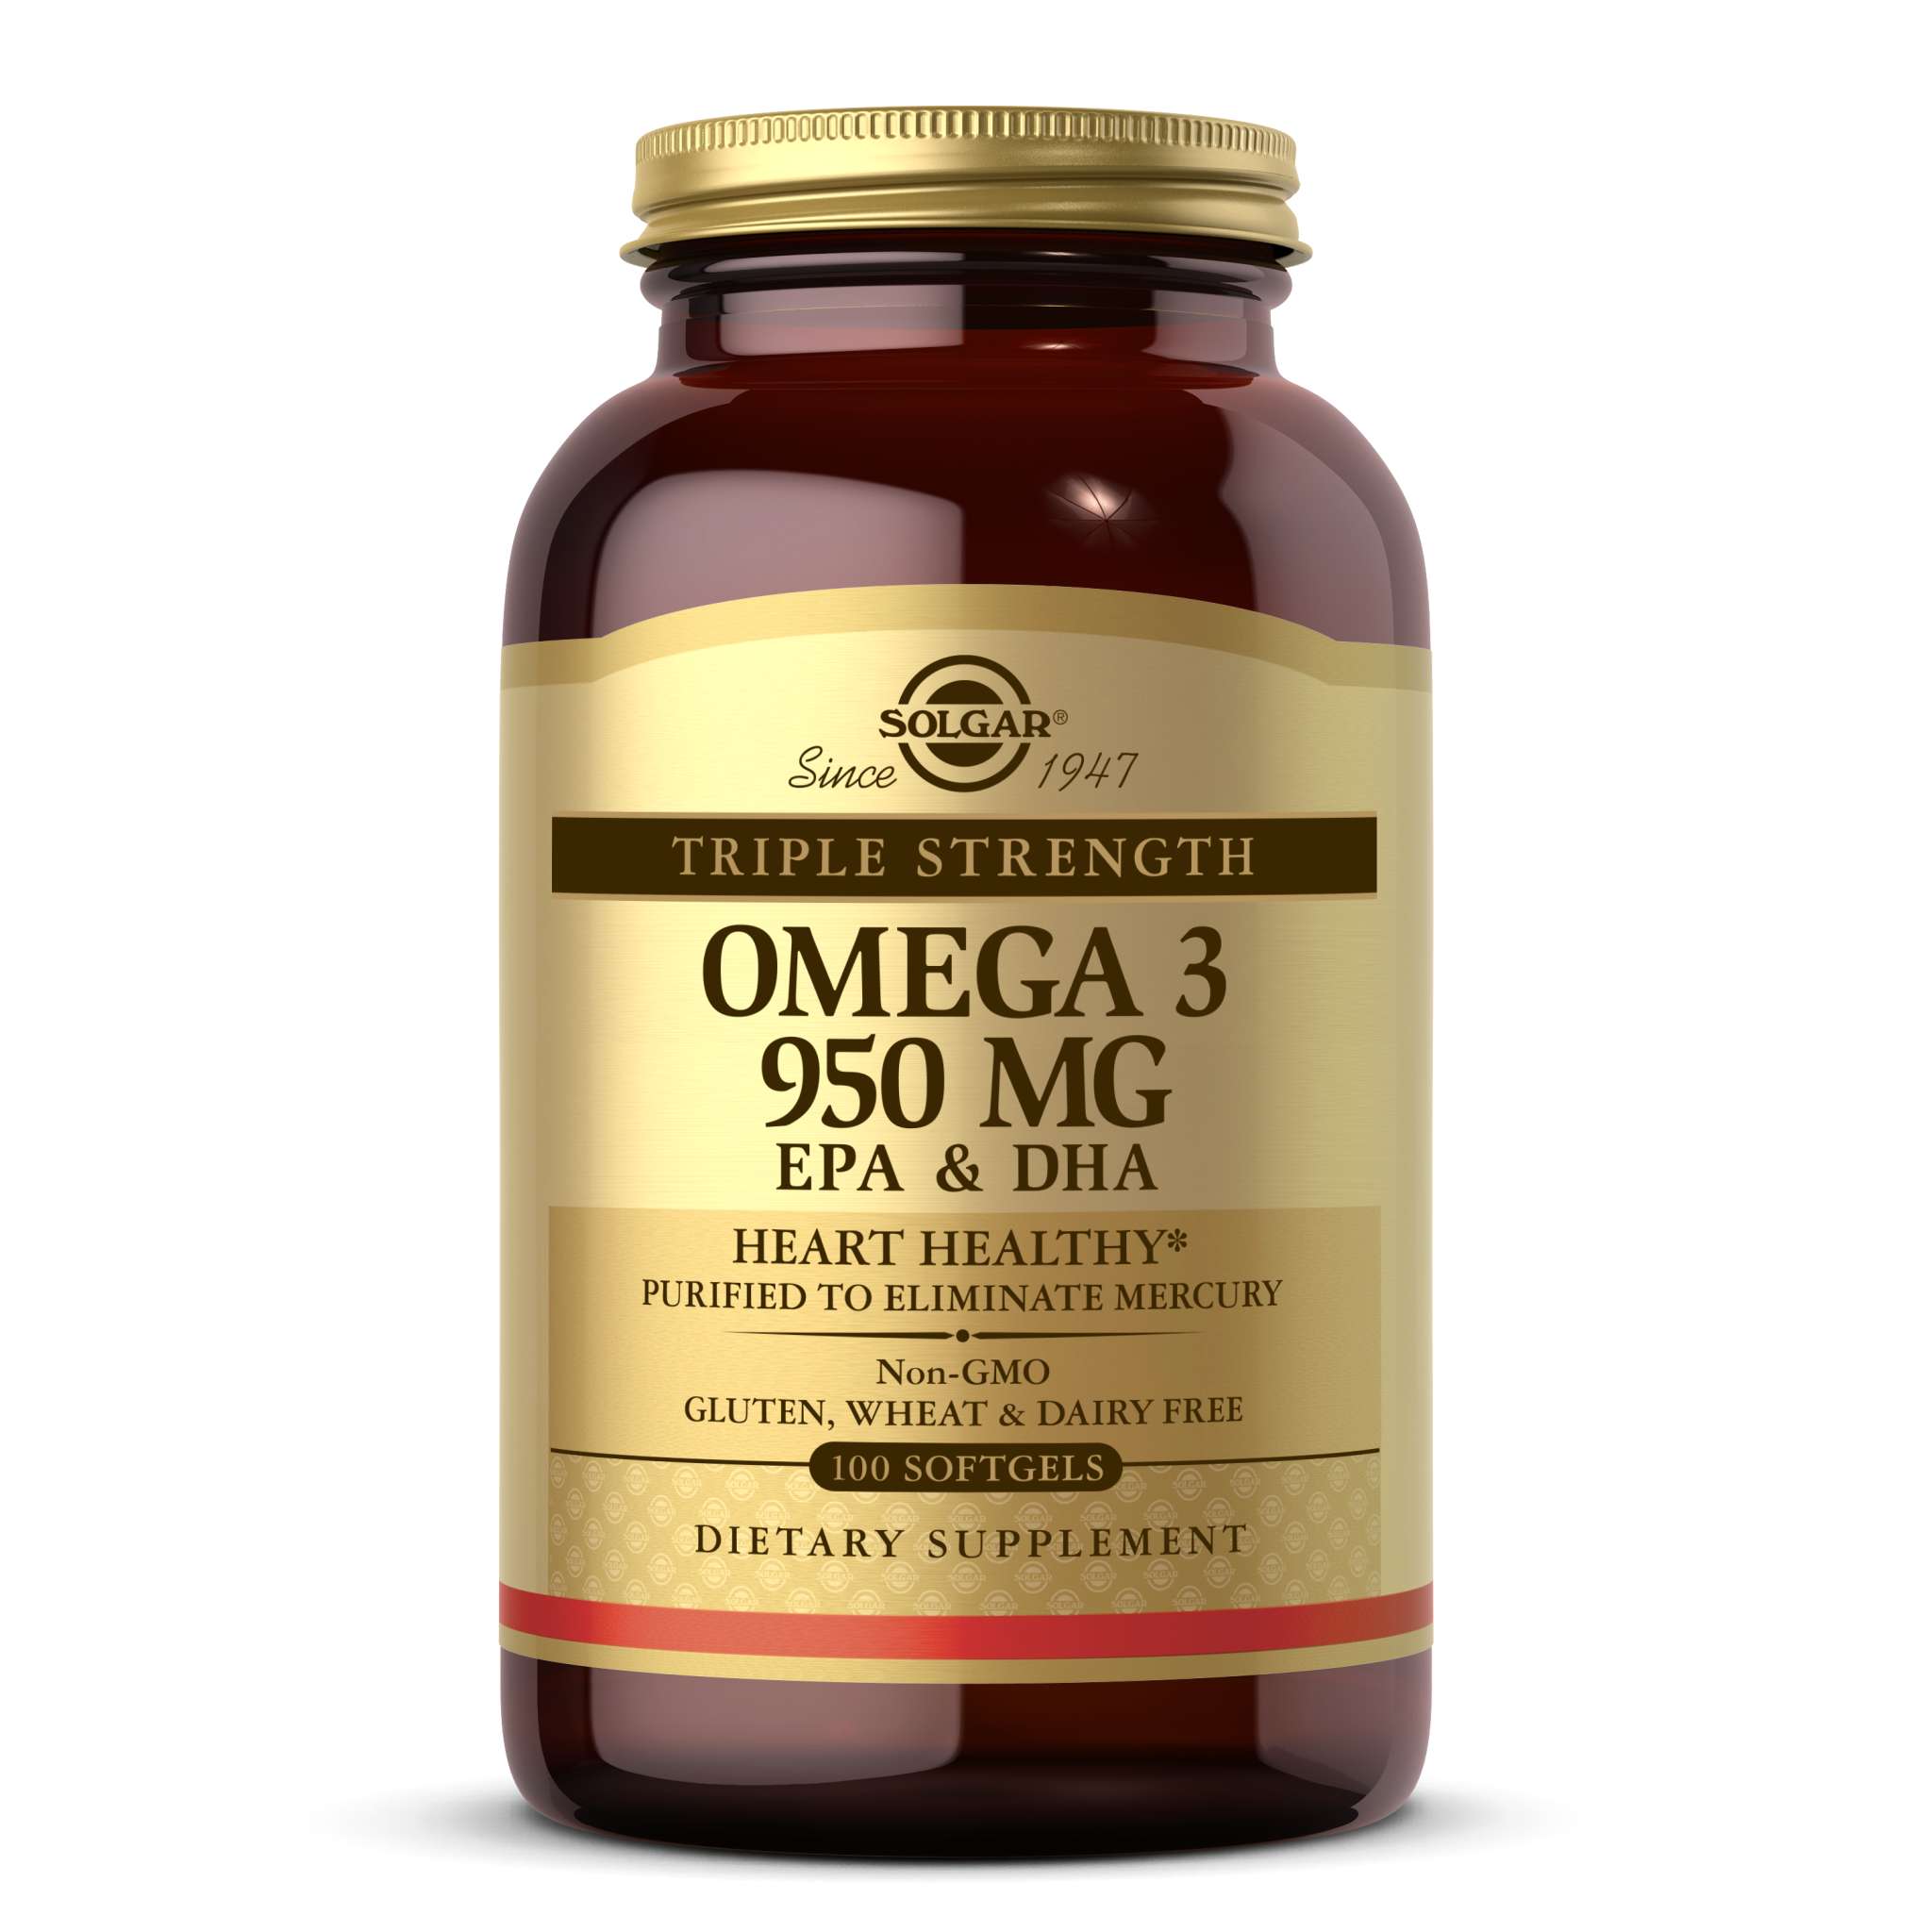 Solgar - Omega 3 950 mg softgel